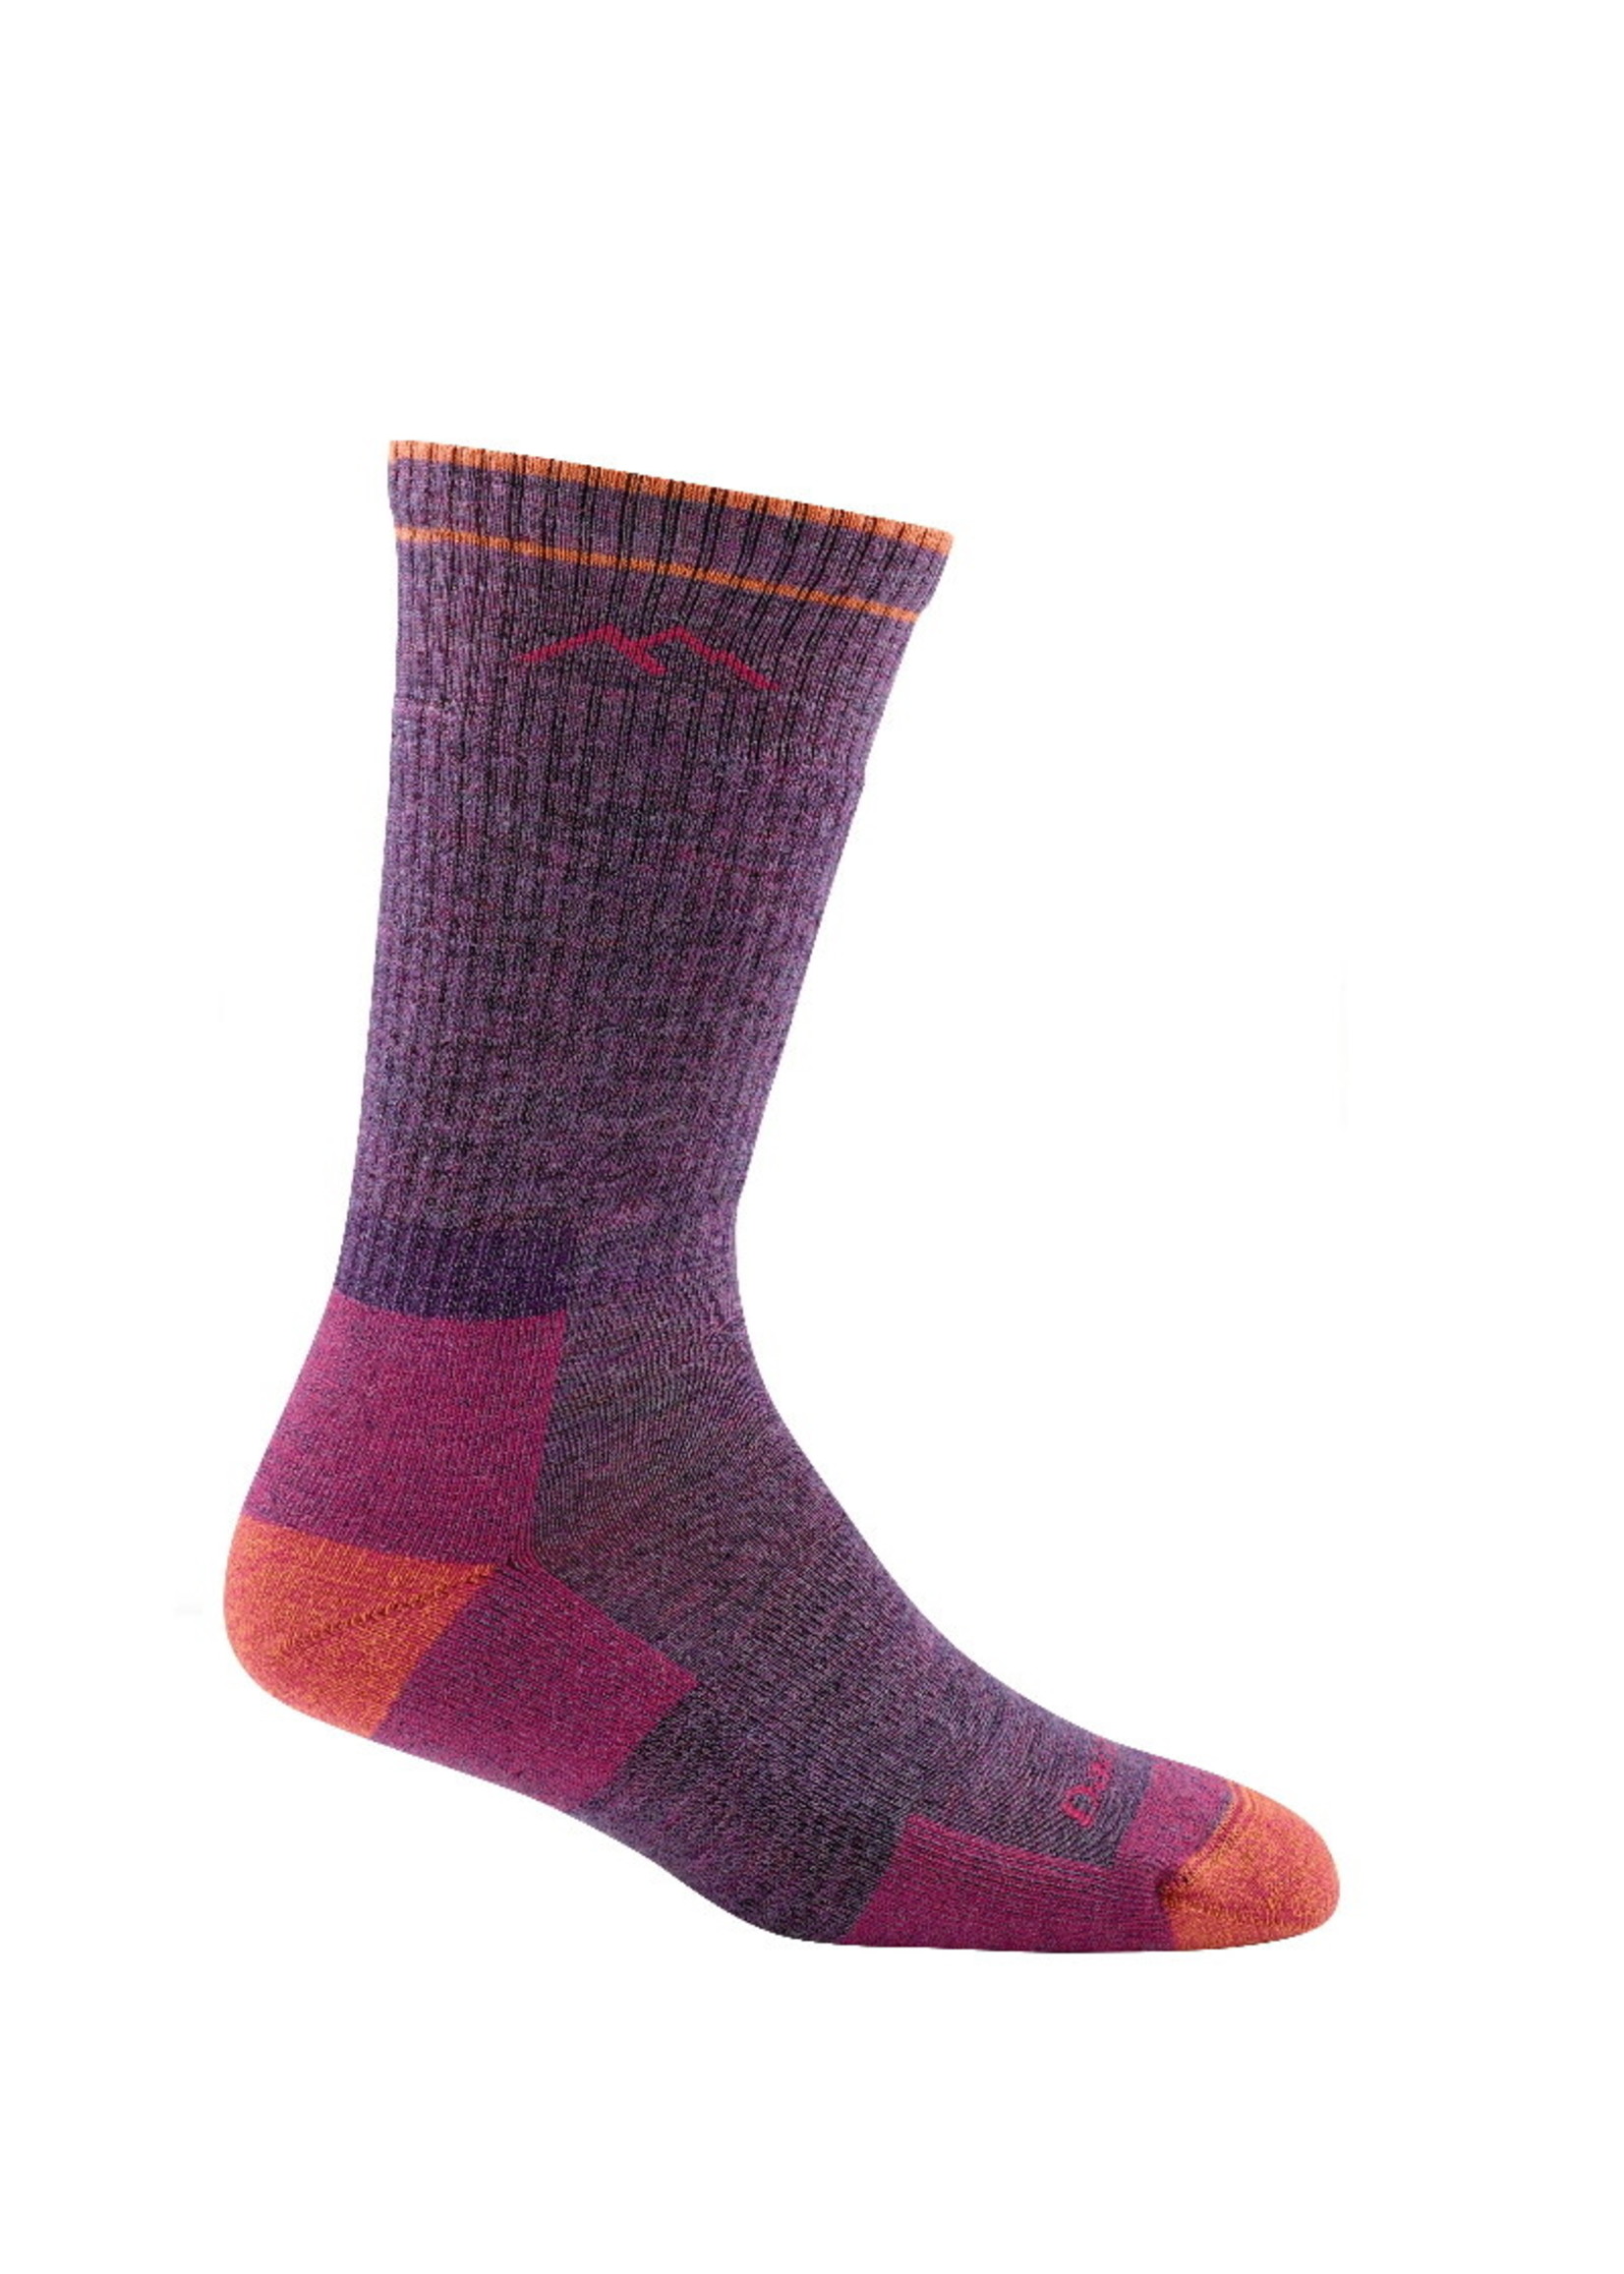 Darn Tough Merino Wool Boot Sock Women's